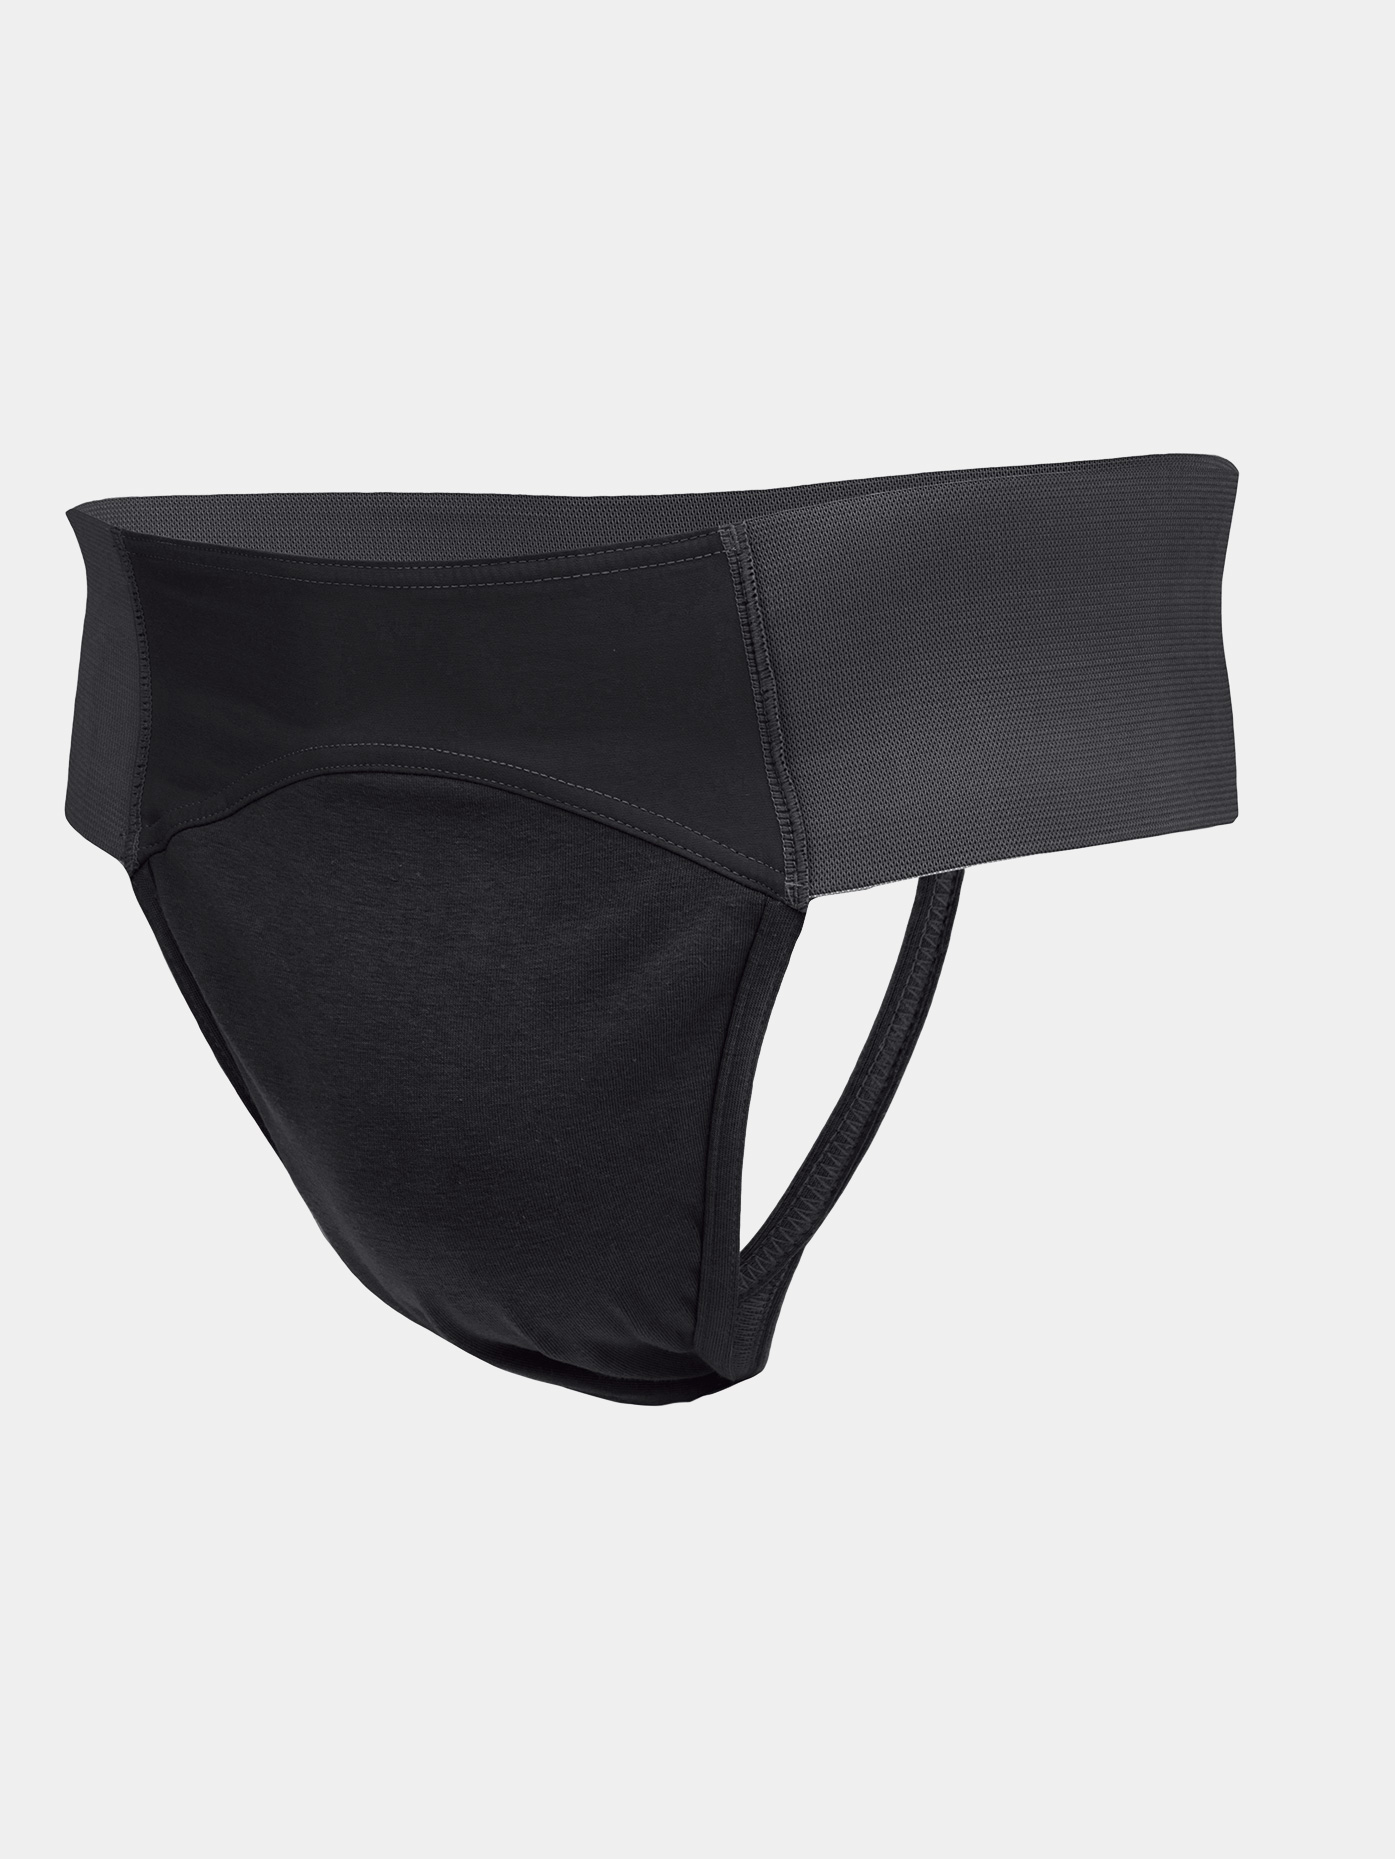 Mens Quilted Dance Belt - Undergarments | Capezio N5930 | DiscountDance.com